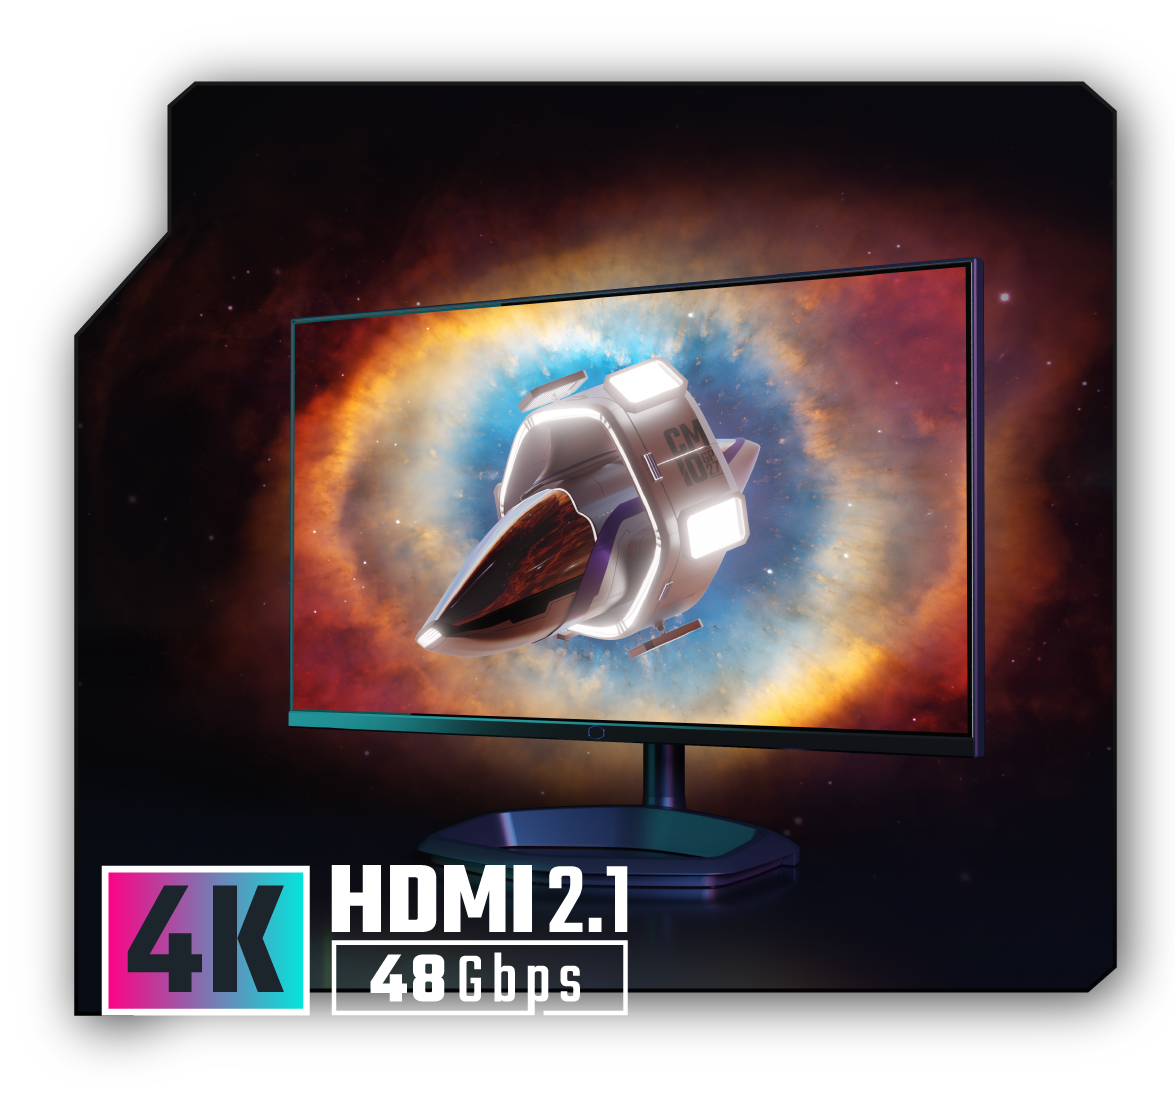 Full bandwidth HDMI 2.1